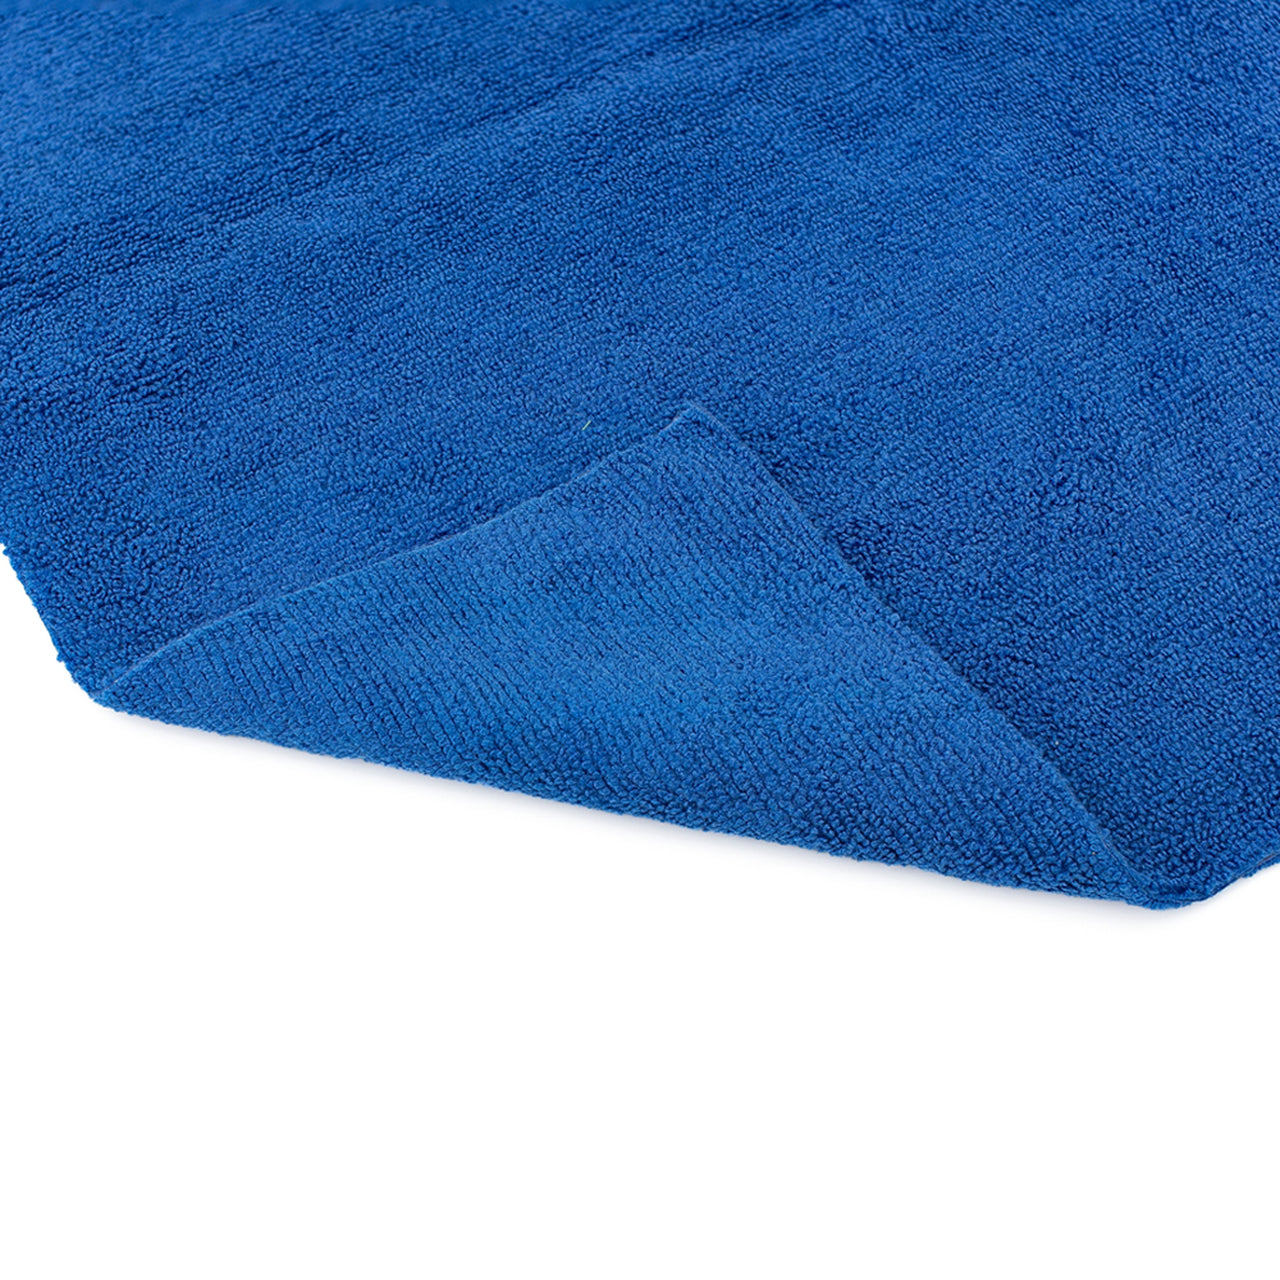 The Rag Company Edgeless 365 Premium 16X16 Terry Towel- Royal Blue